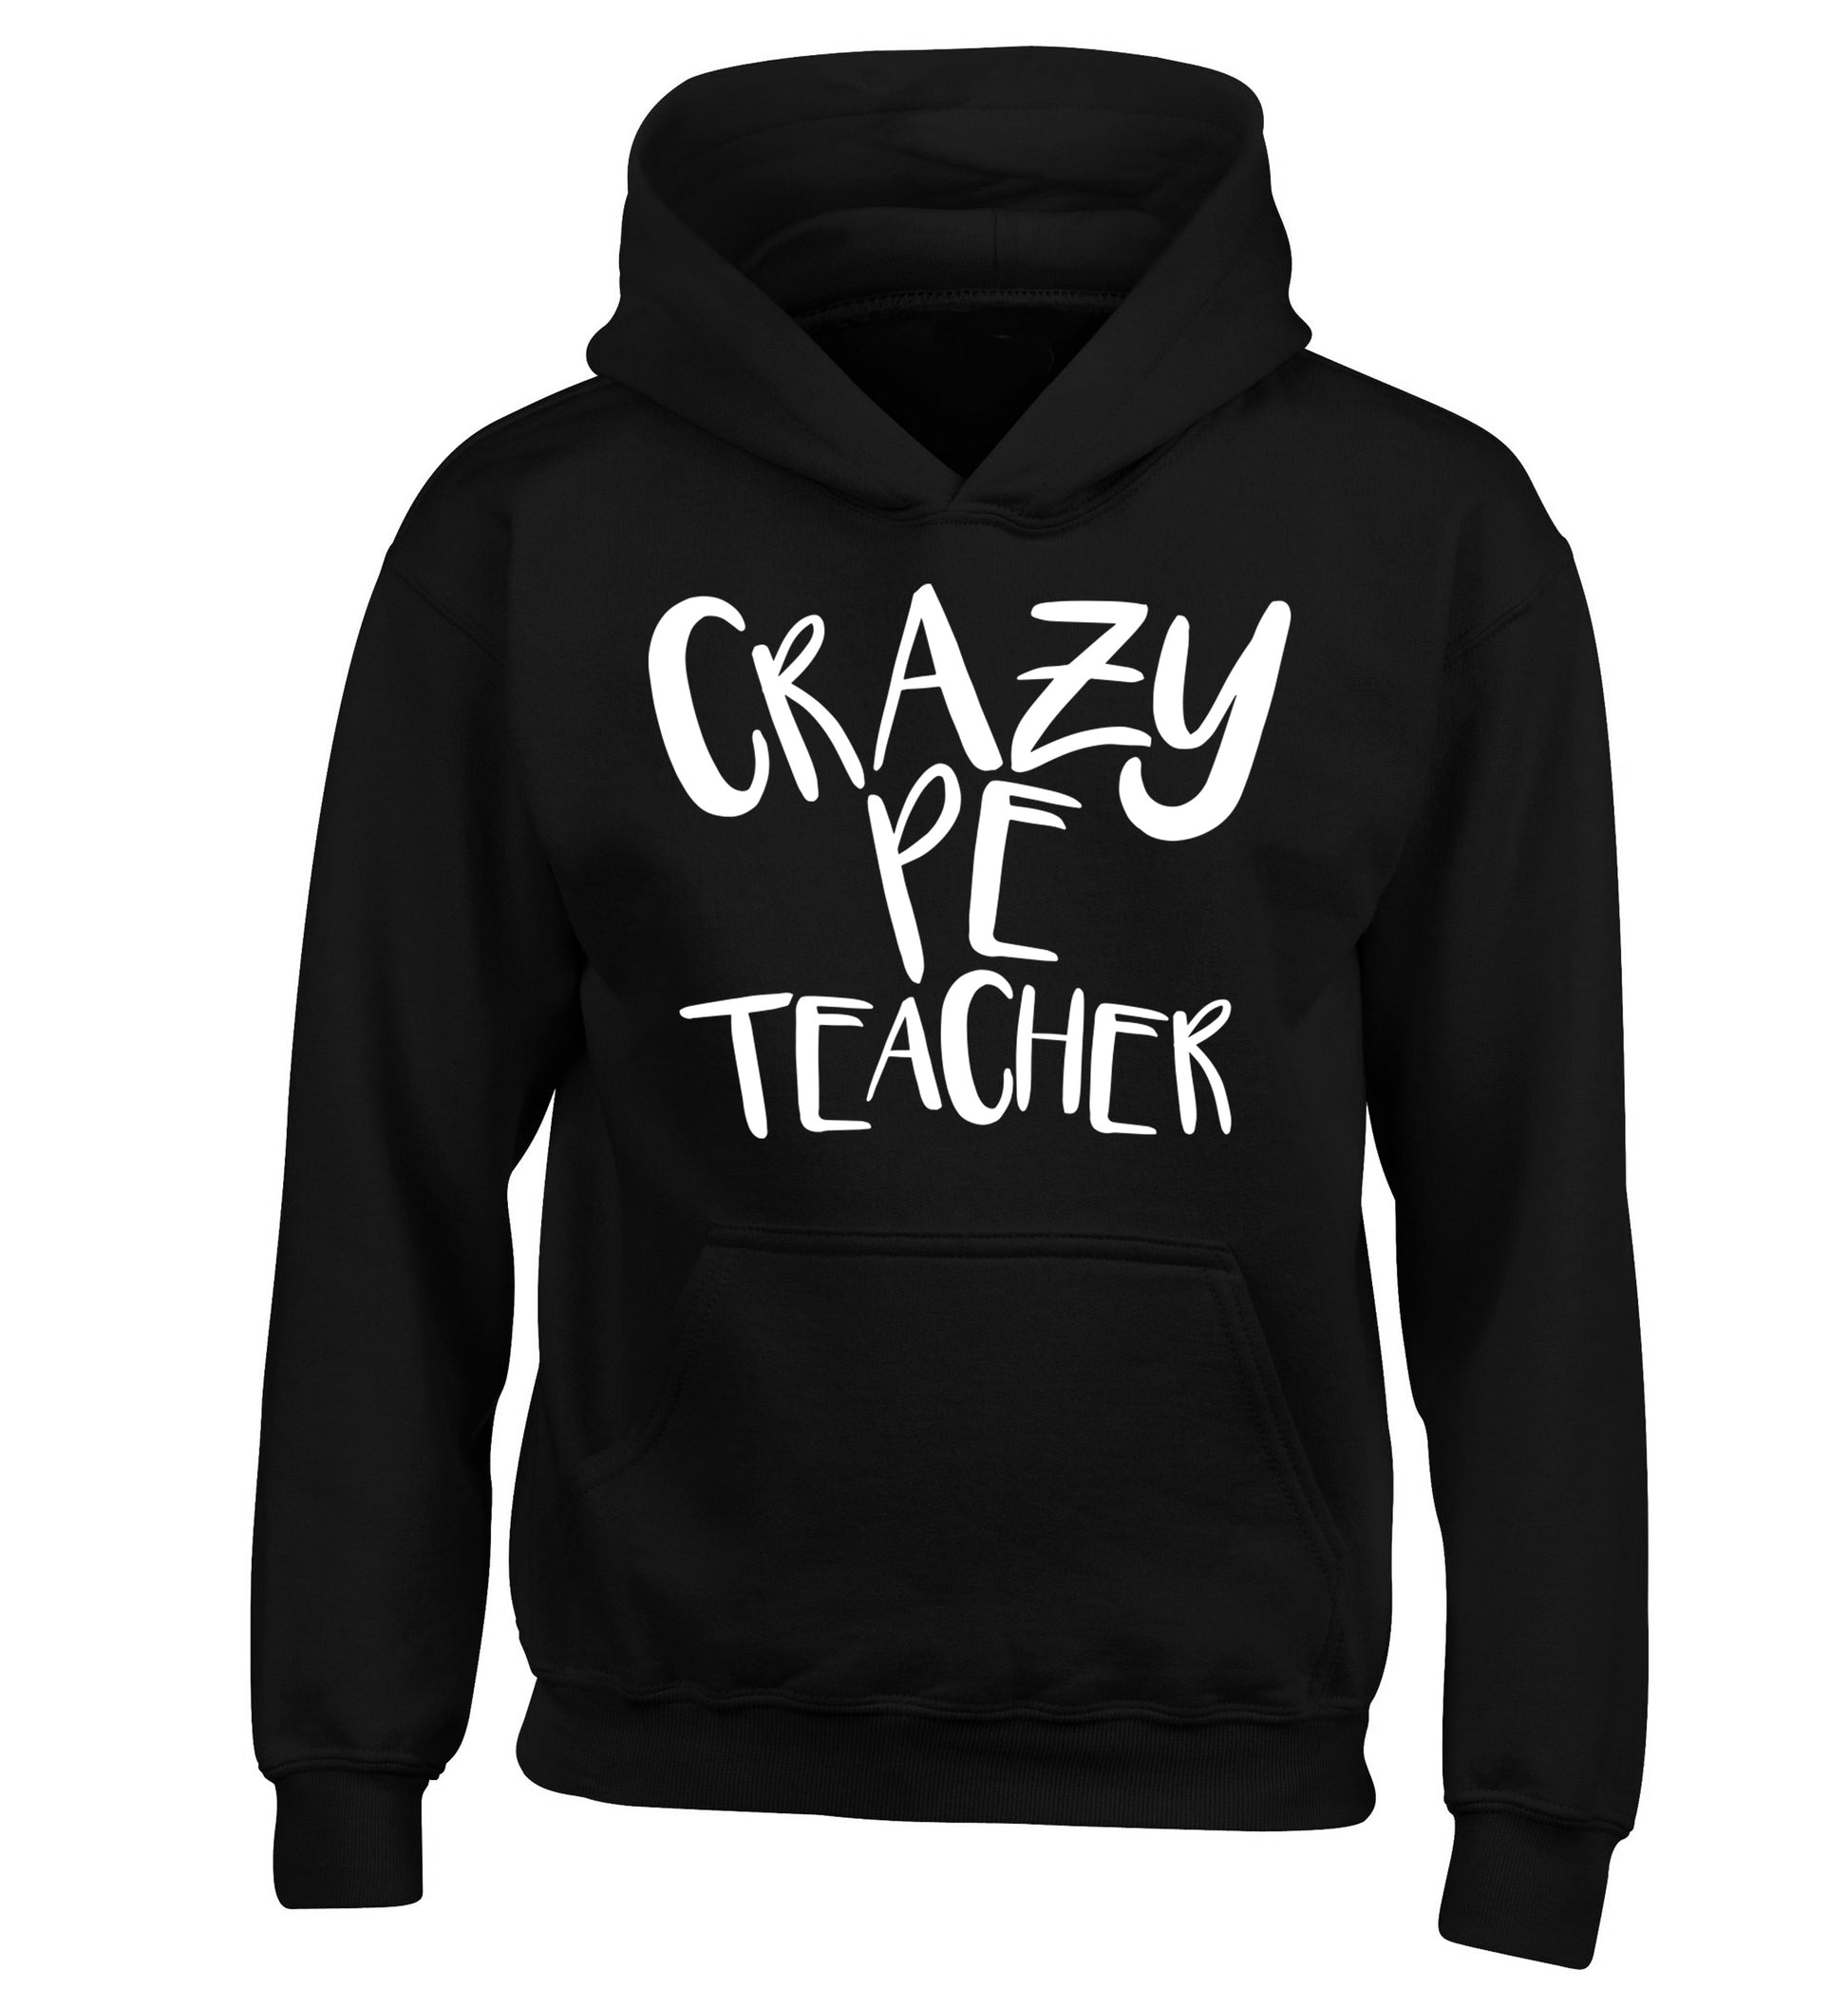 Crazy PE teacher children's black hoodie 12-13 Years